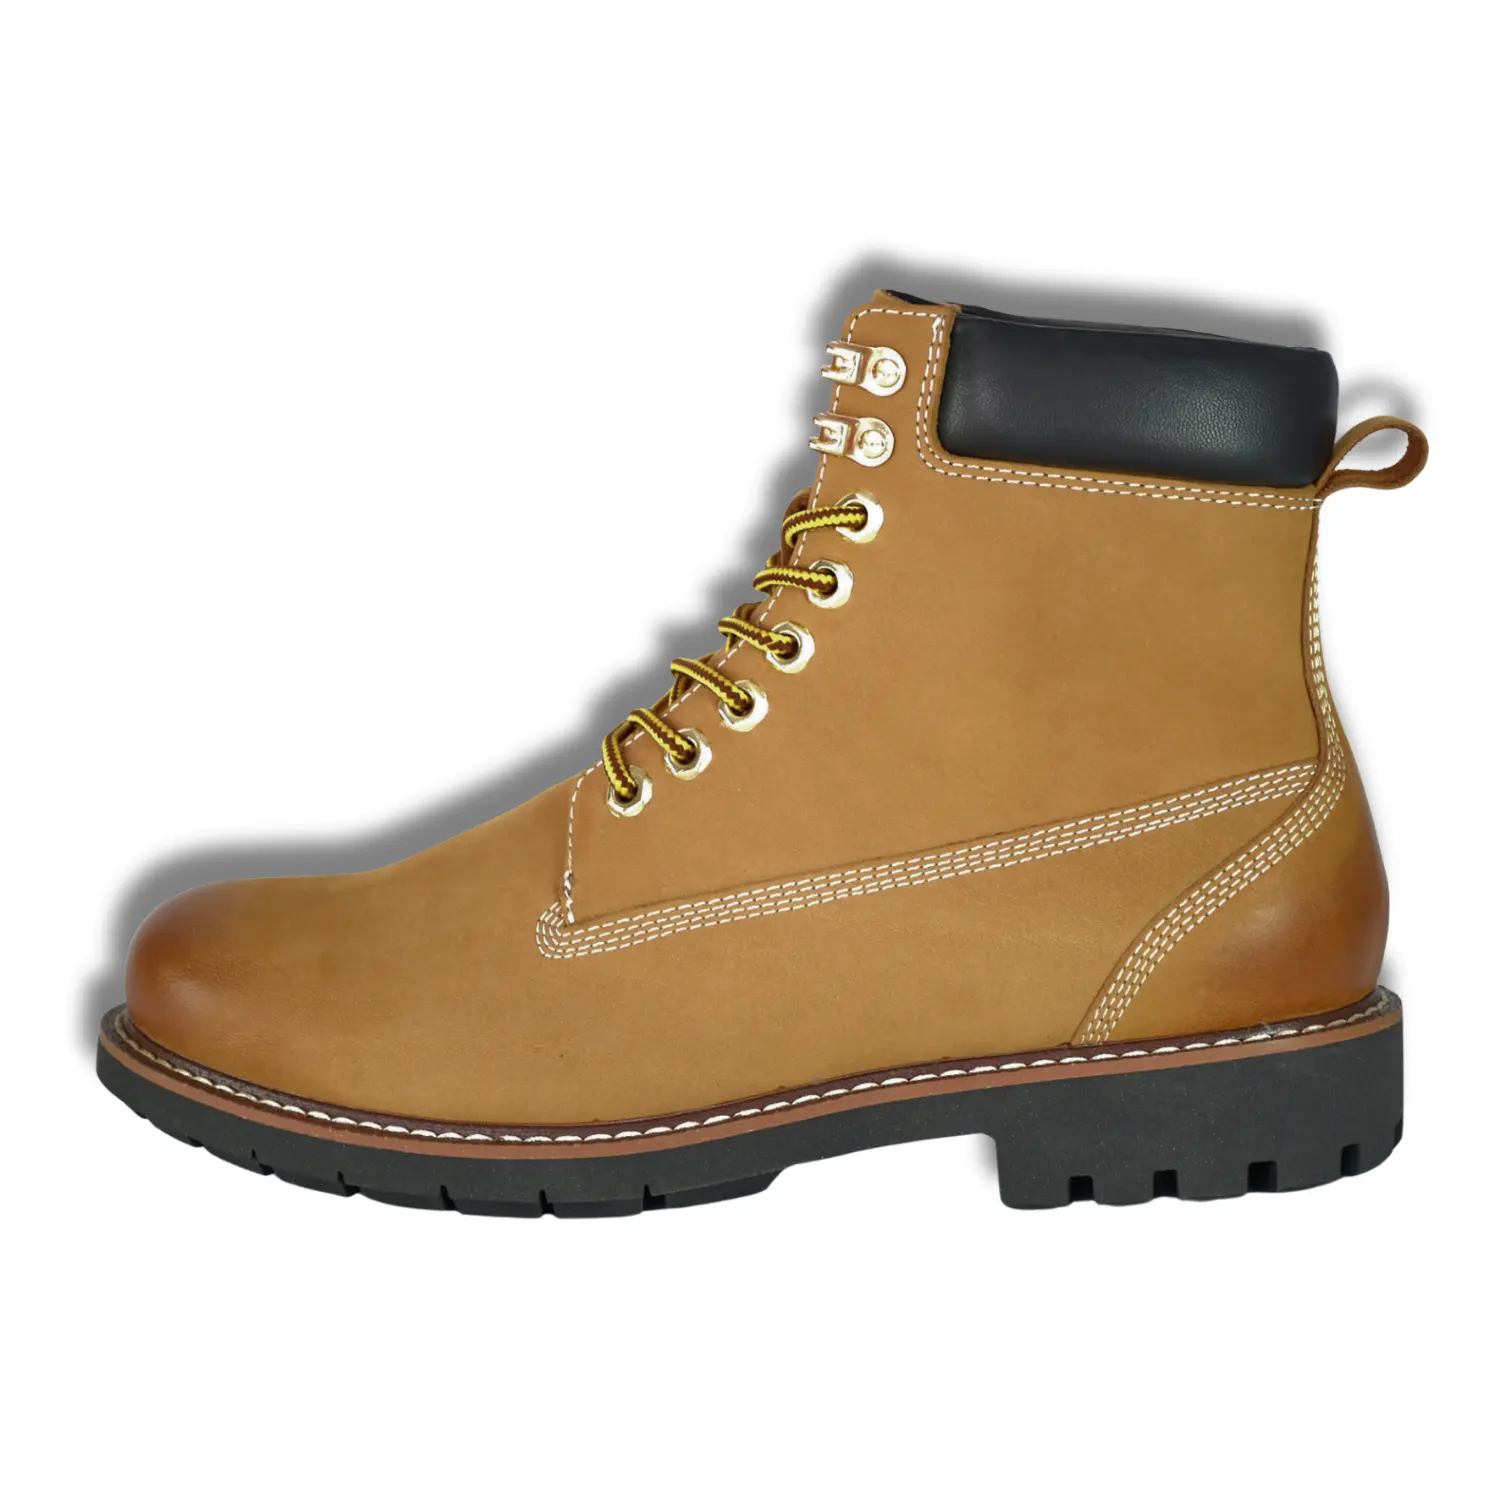 YIHE Factory Direct New Men's Martin Boots Estilo británico Altura del tobillo Palladium Shoes Winter Flat Feature Direct Leather Upper